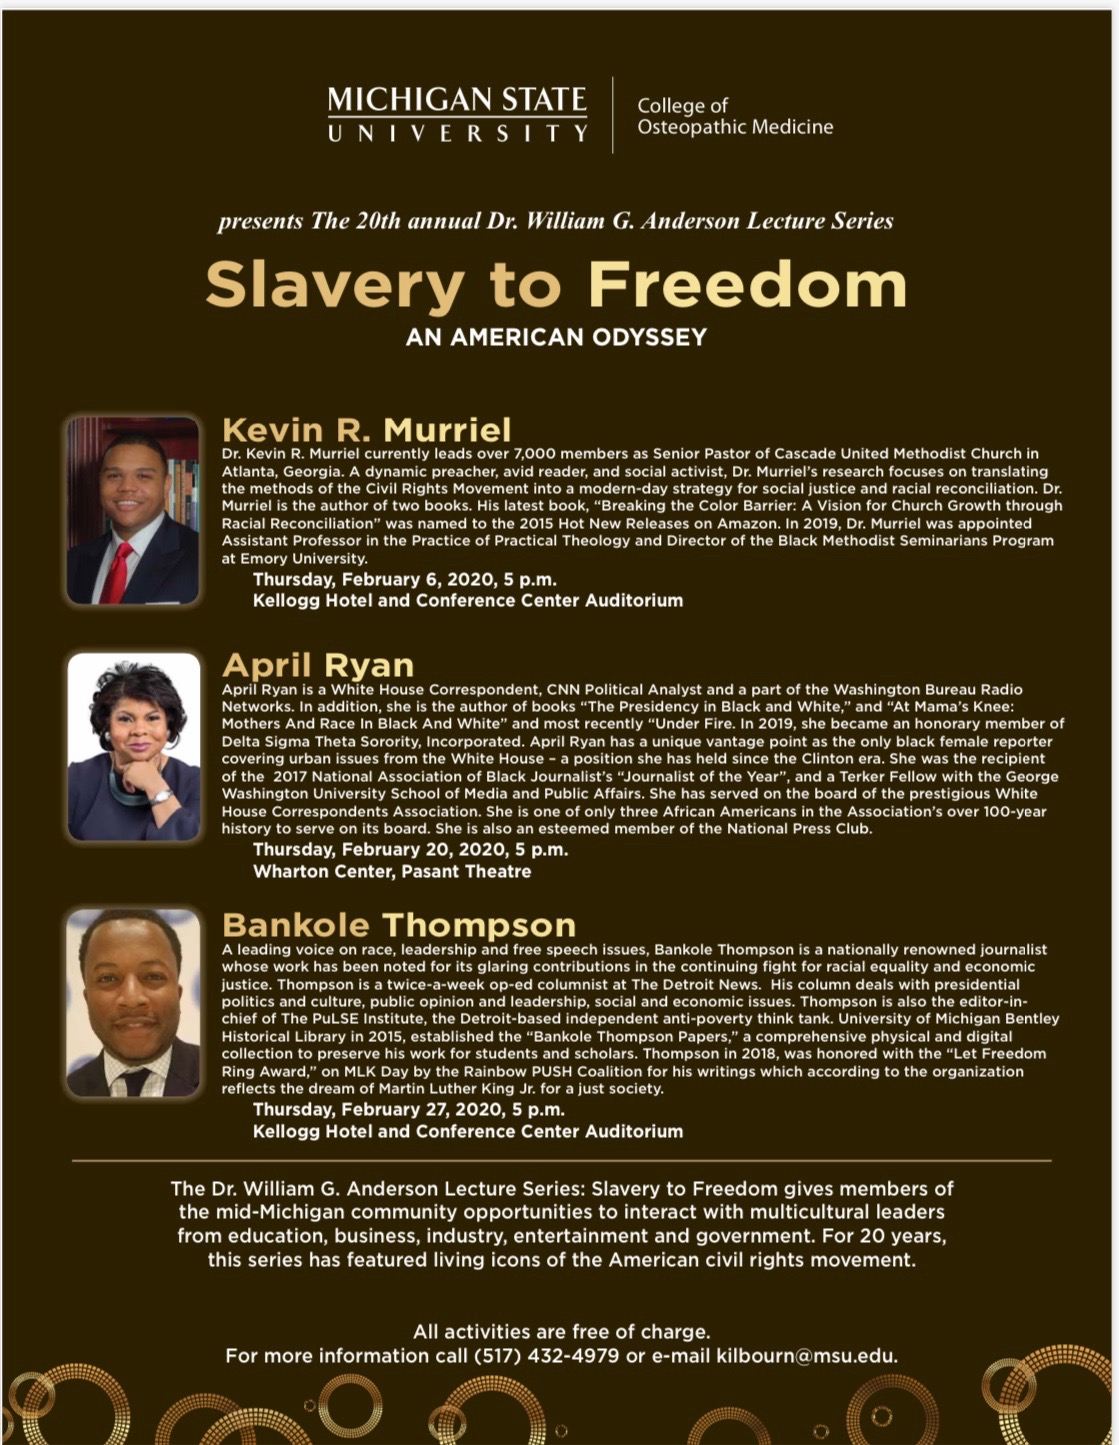 Slavery To Freedom Speaker: Kevin R. Murriel